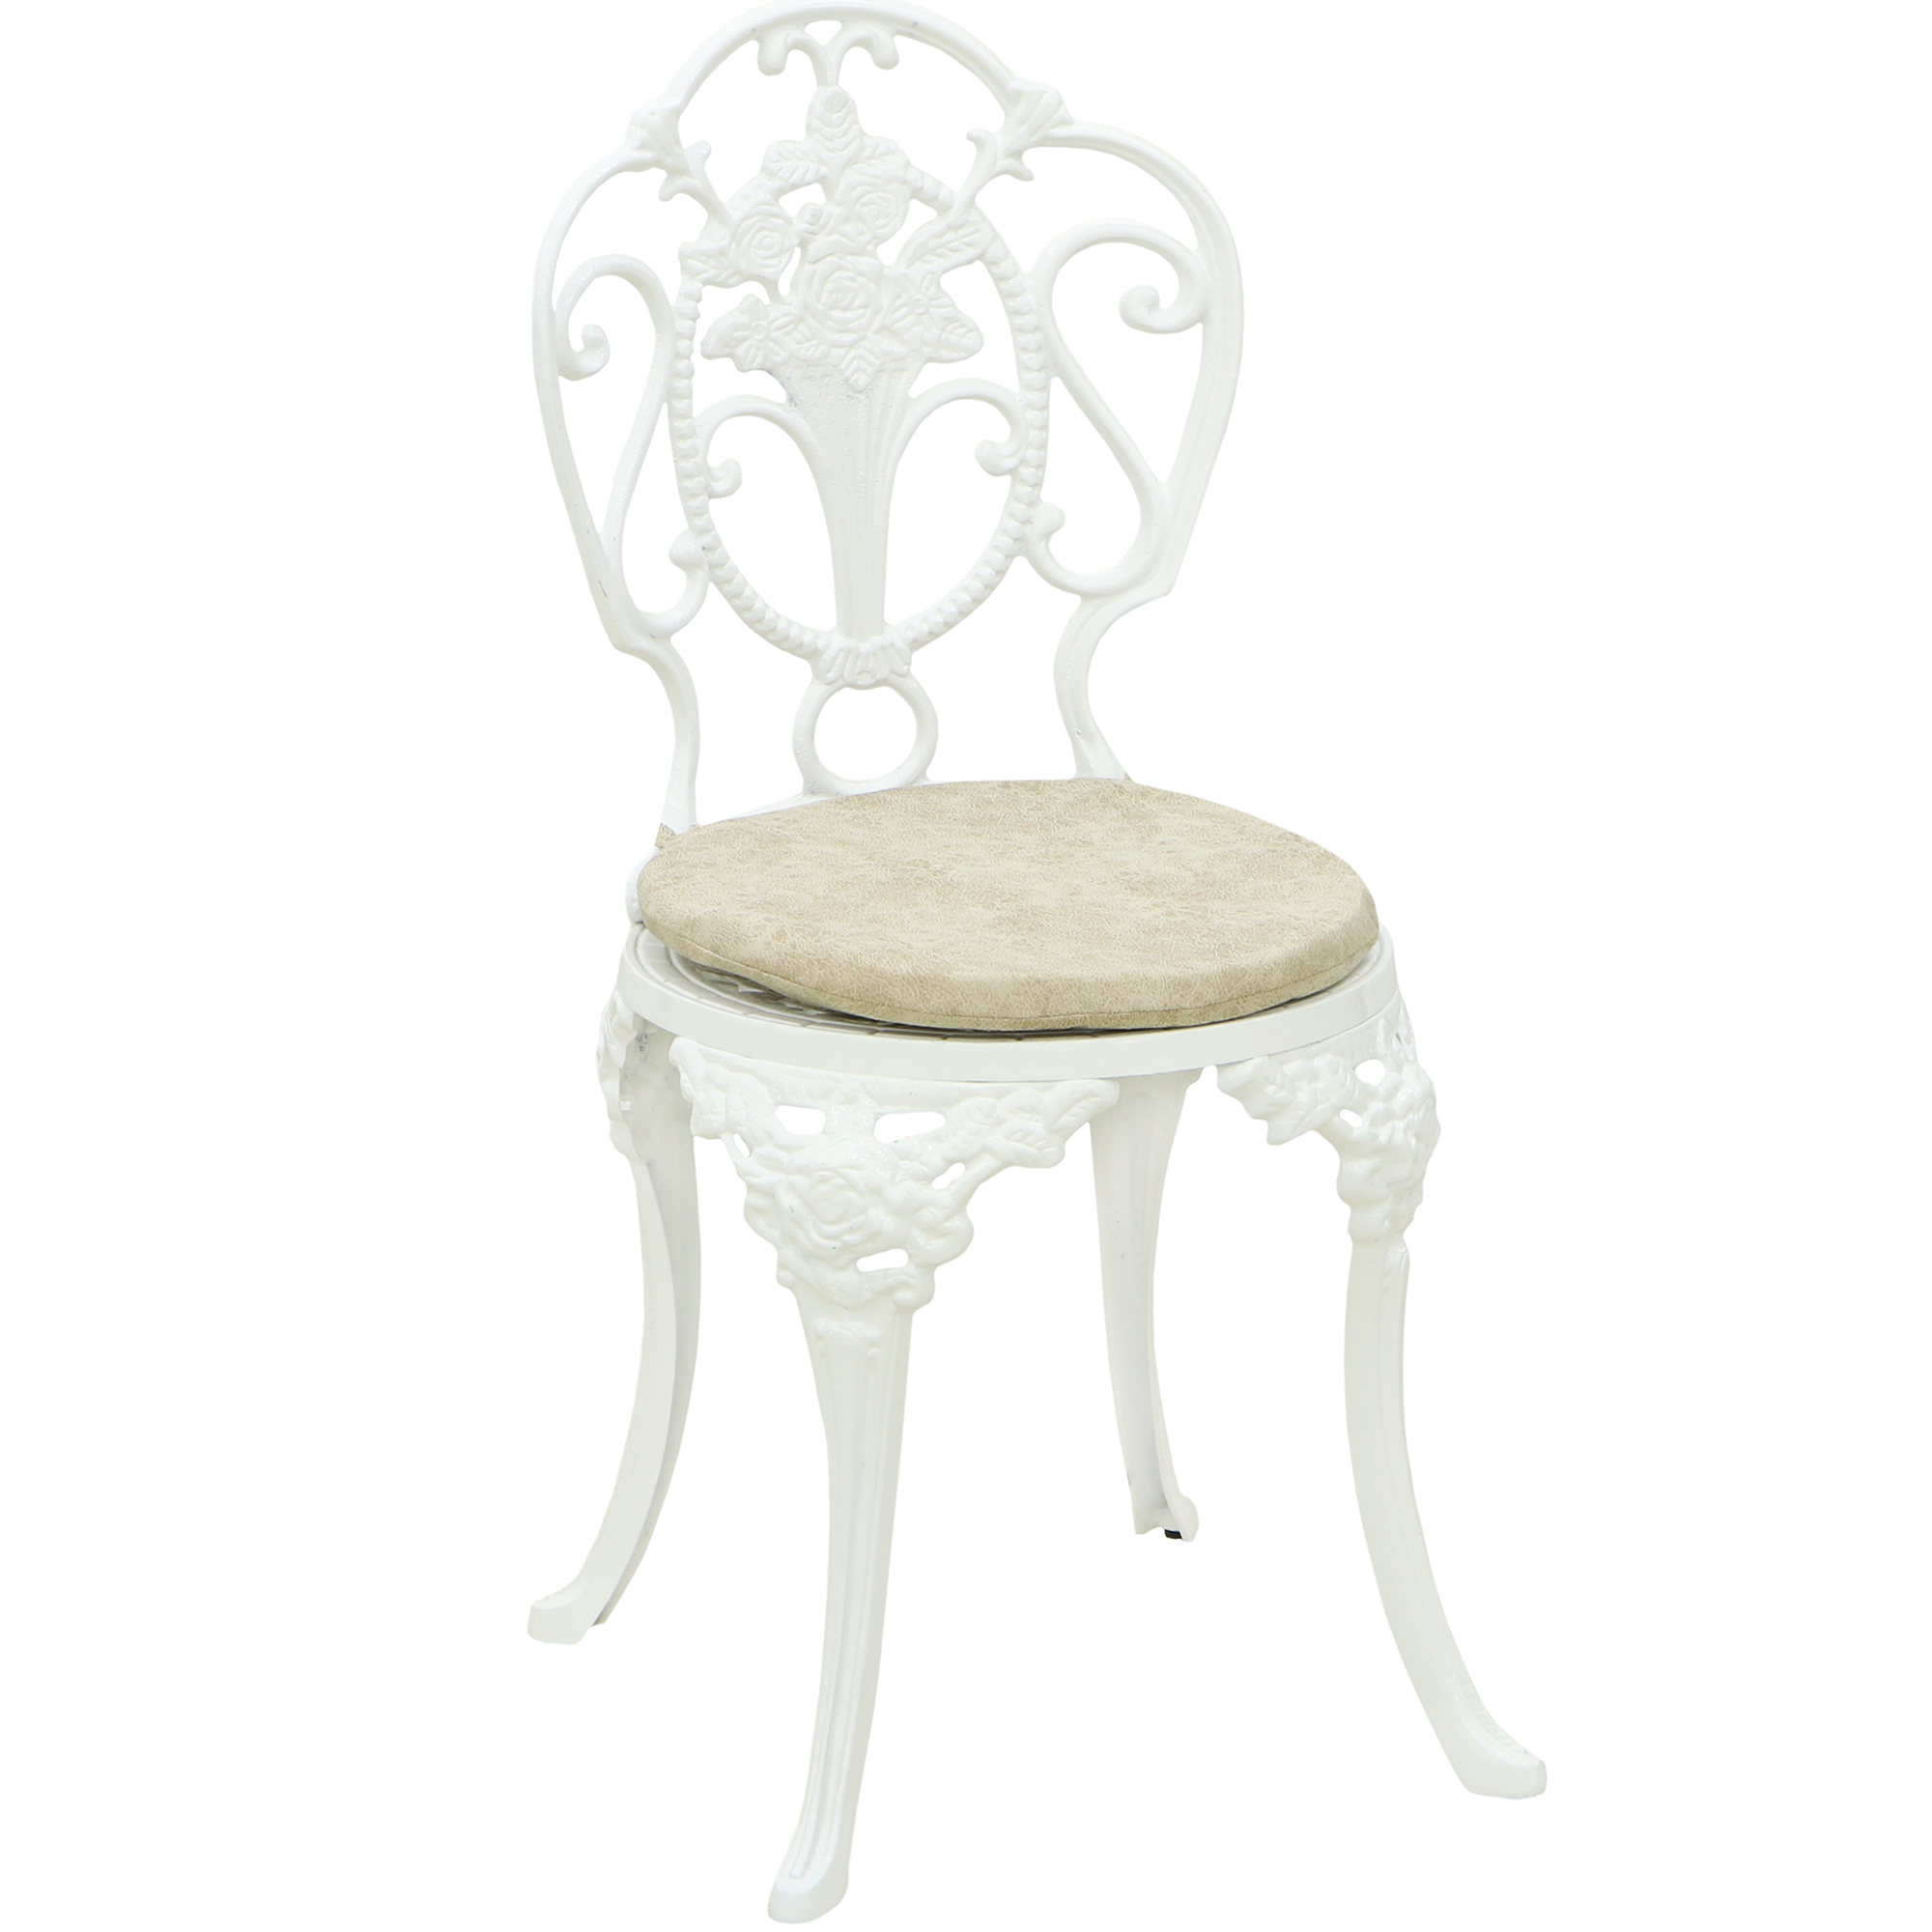 Комплект мебели  Lofa bistro 3 предмета, цвет белый, размер 52х40х89 см - фото 3